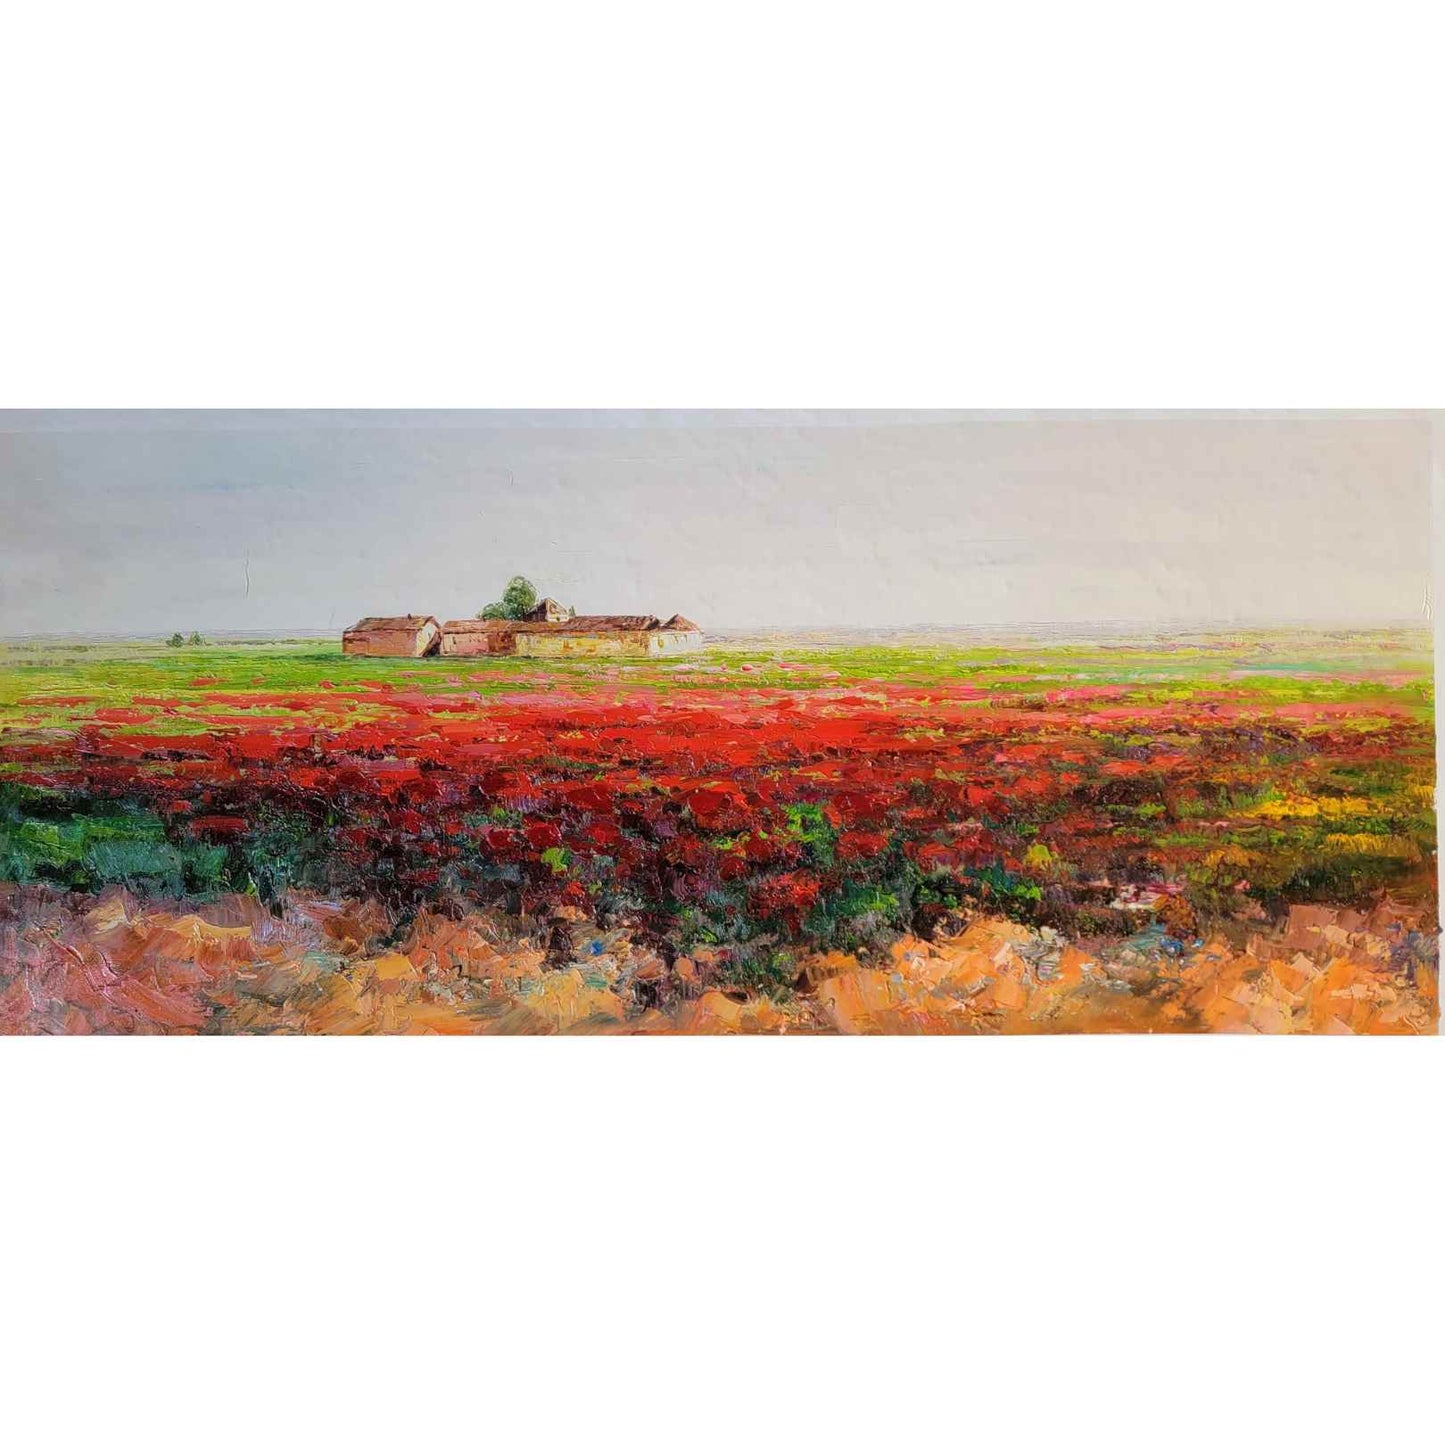 Painting the Poppy Field 130x55 cm